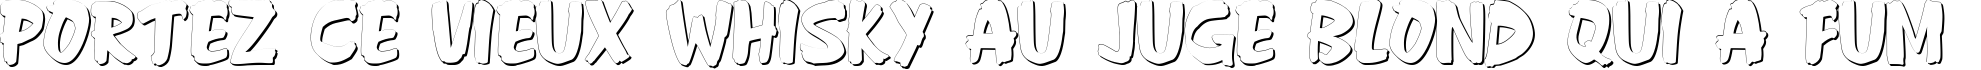 Пример написания шрифтом Anderson Fireball XL5 Shadow текста на французском